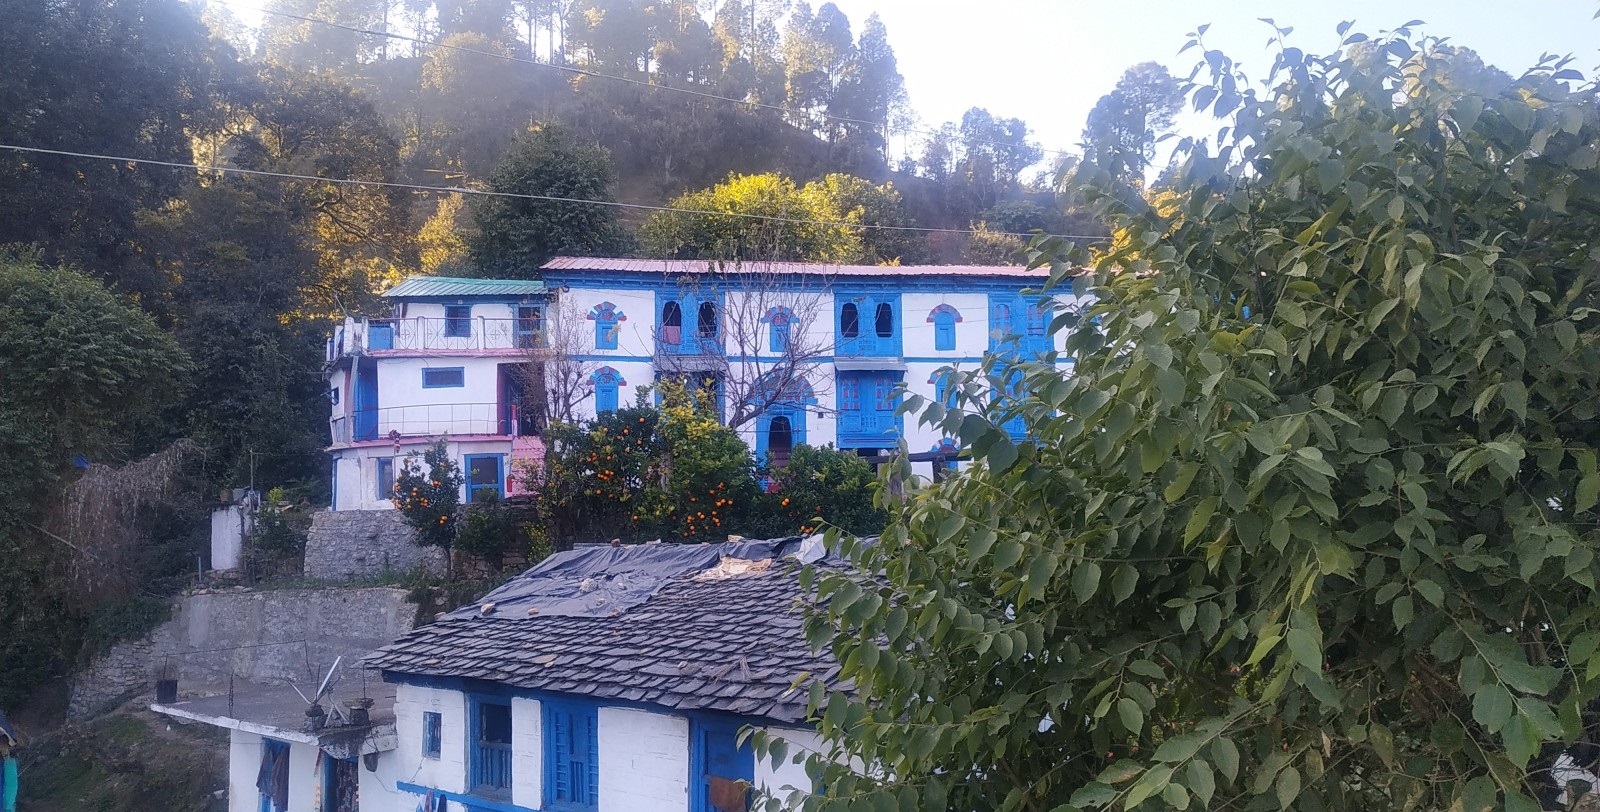 Tunda Chauri village, Pithoragarh